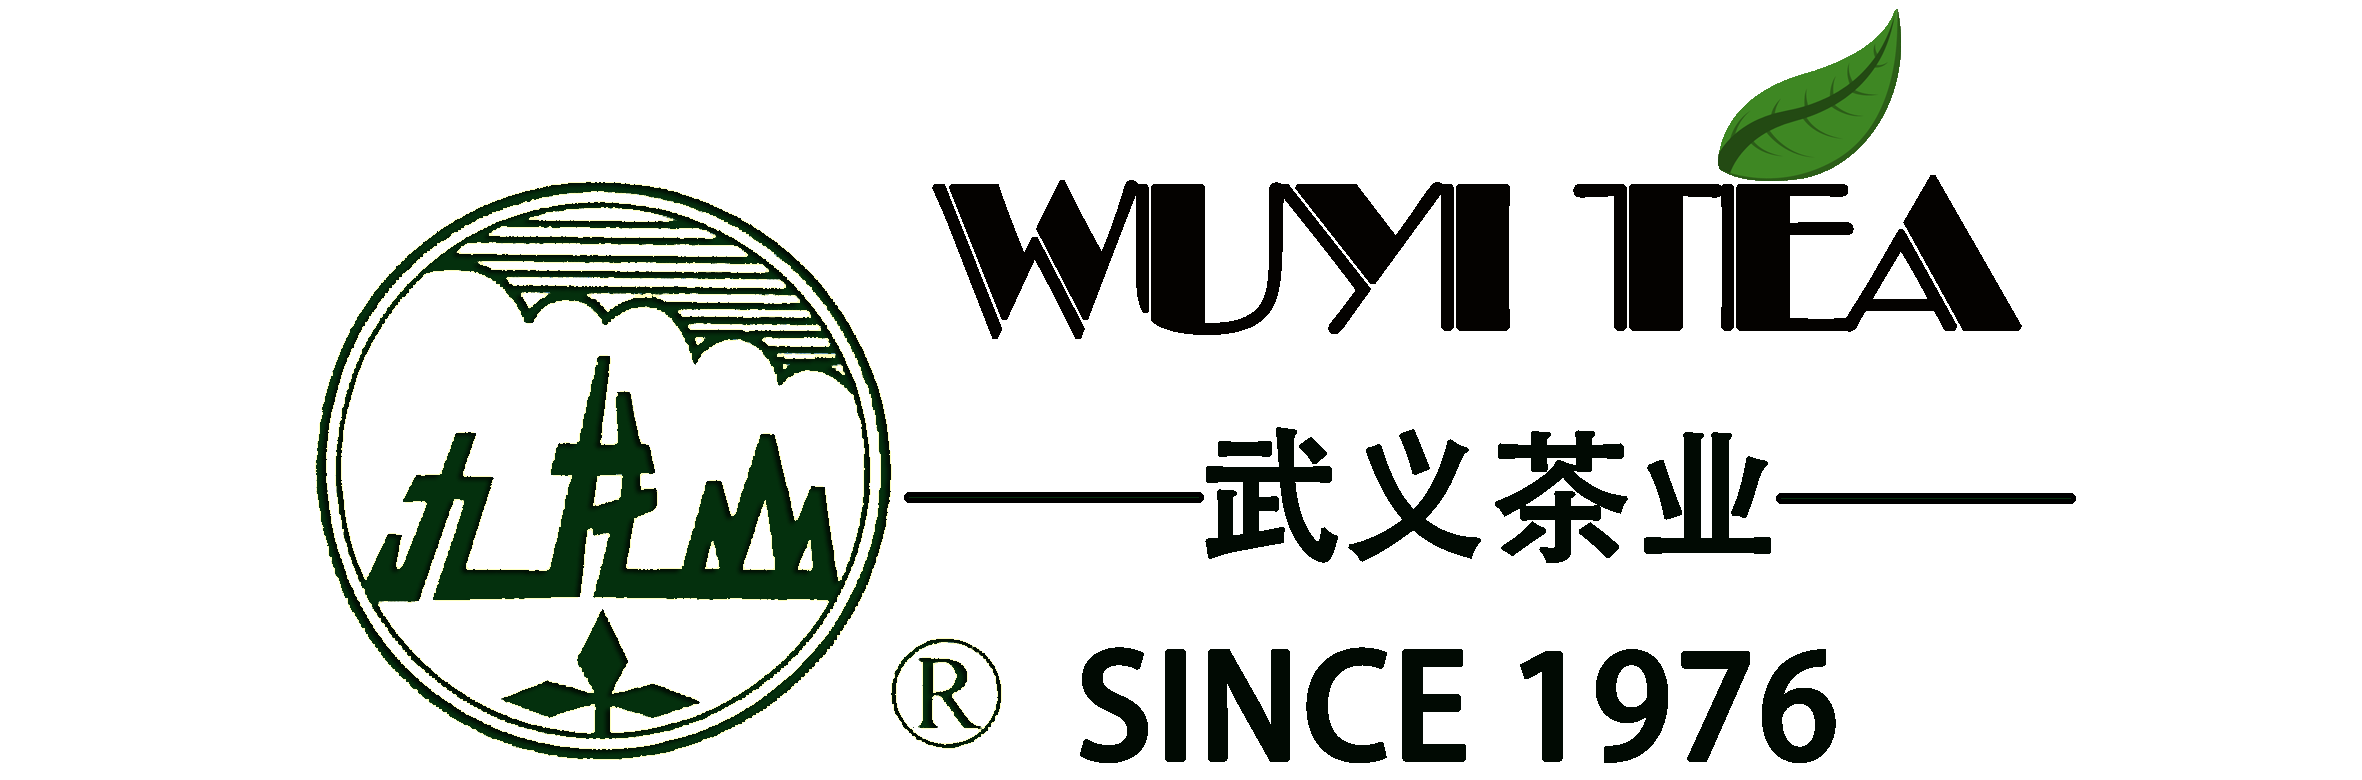 Market Coverage - Zhejiang Wuyi Tea Industry Co., Ltd.